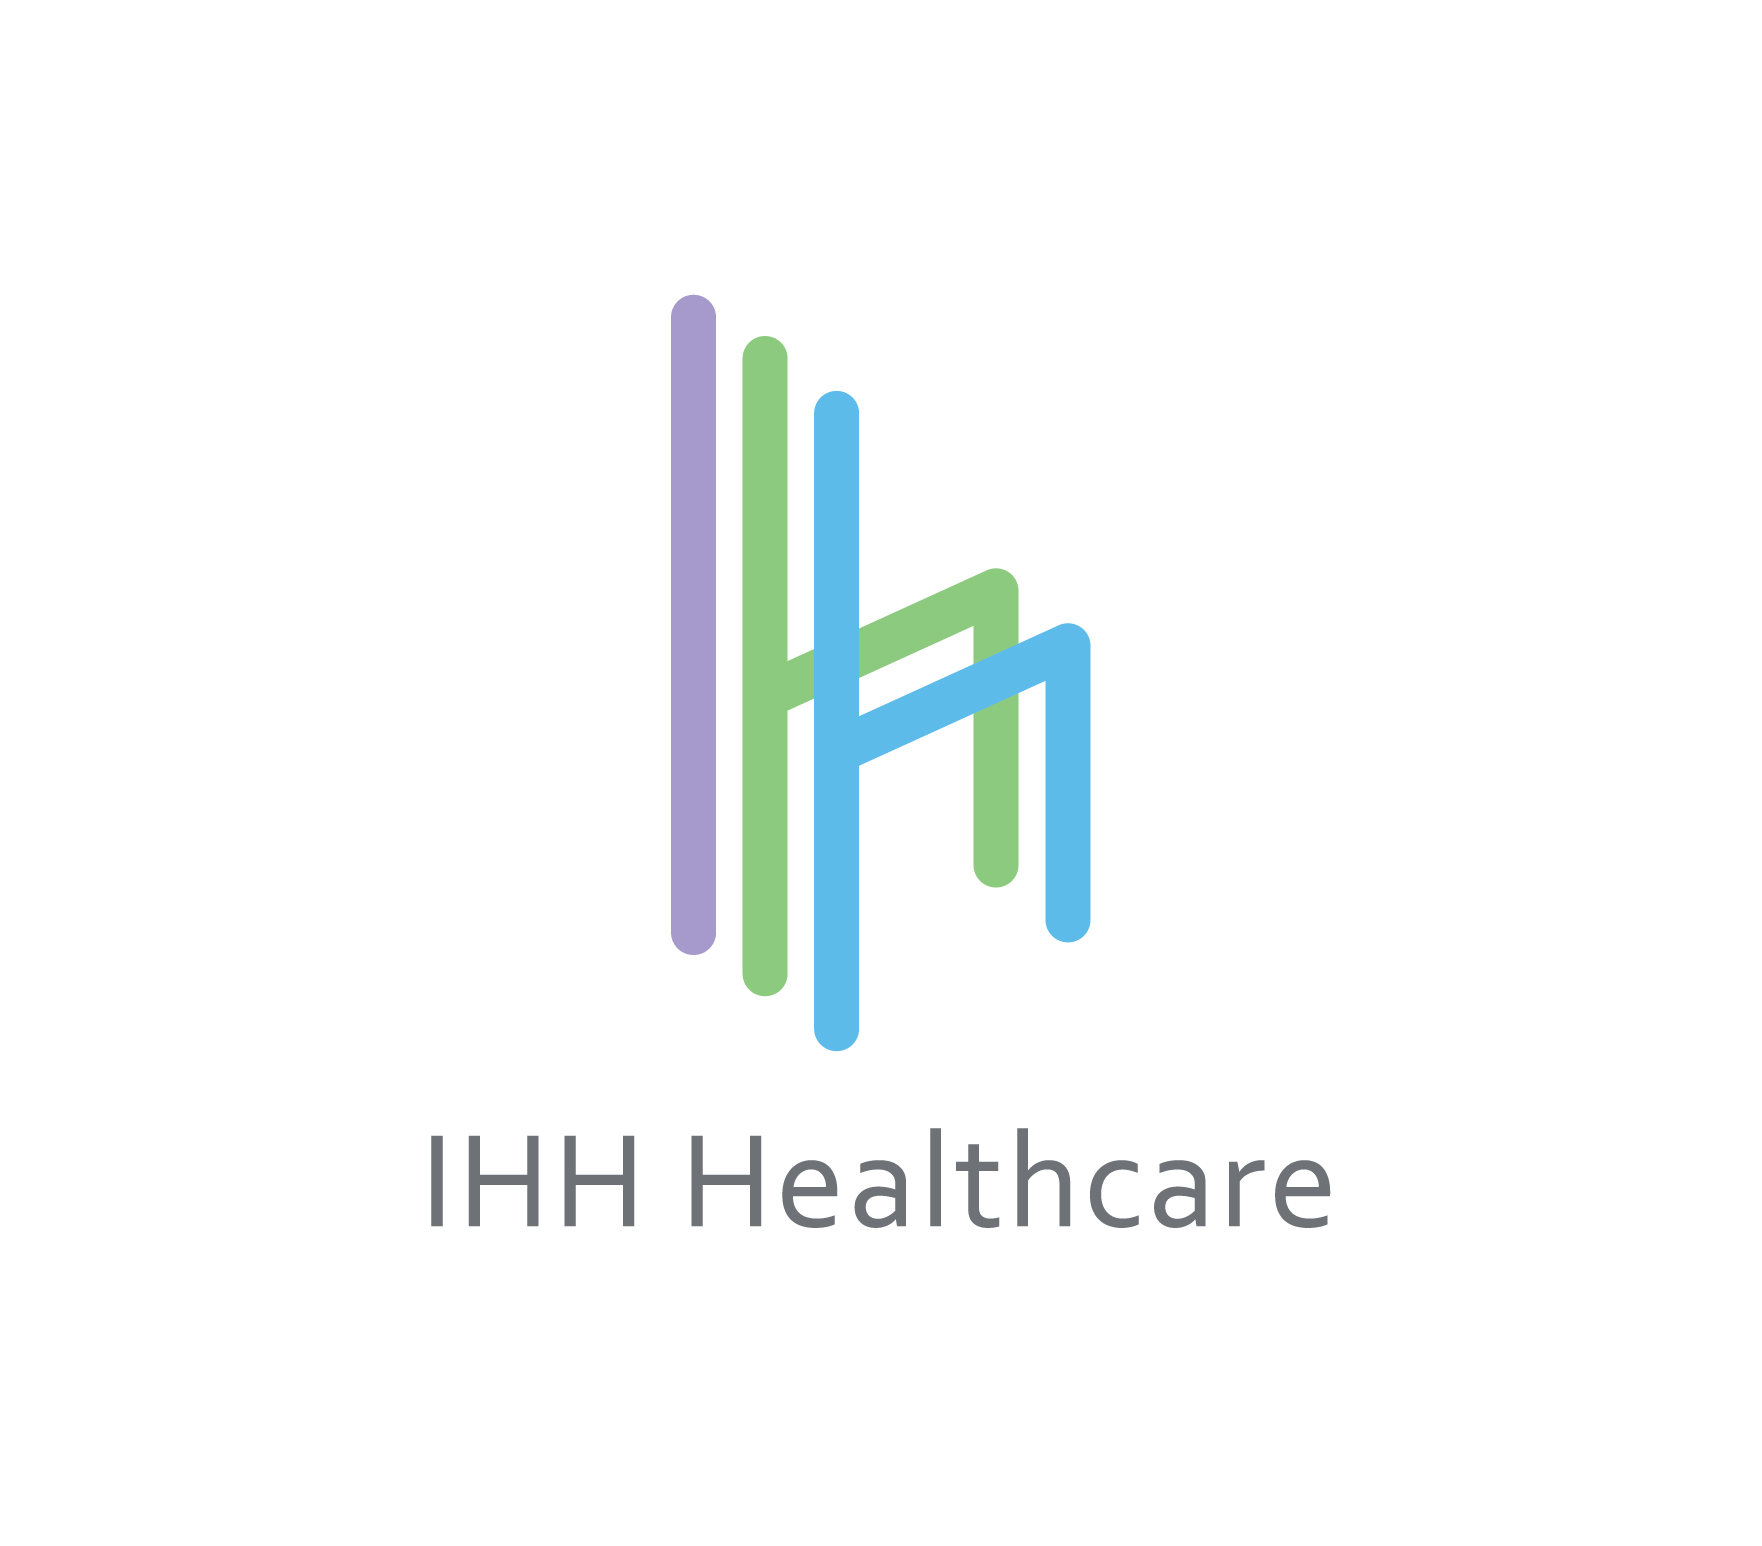 IHH Healthcare logo.jpg